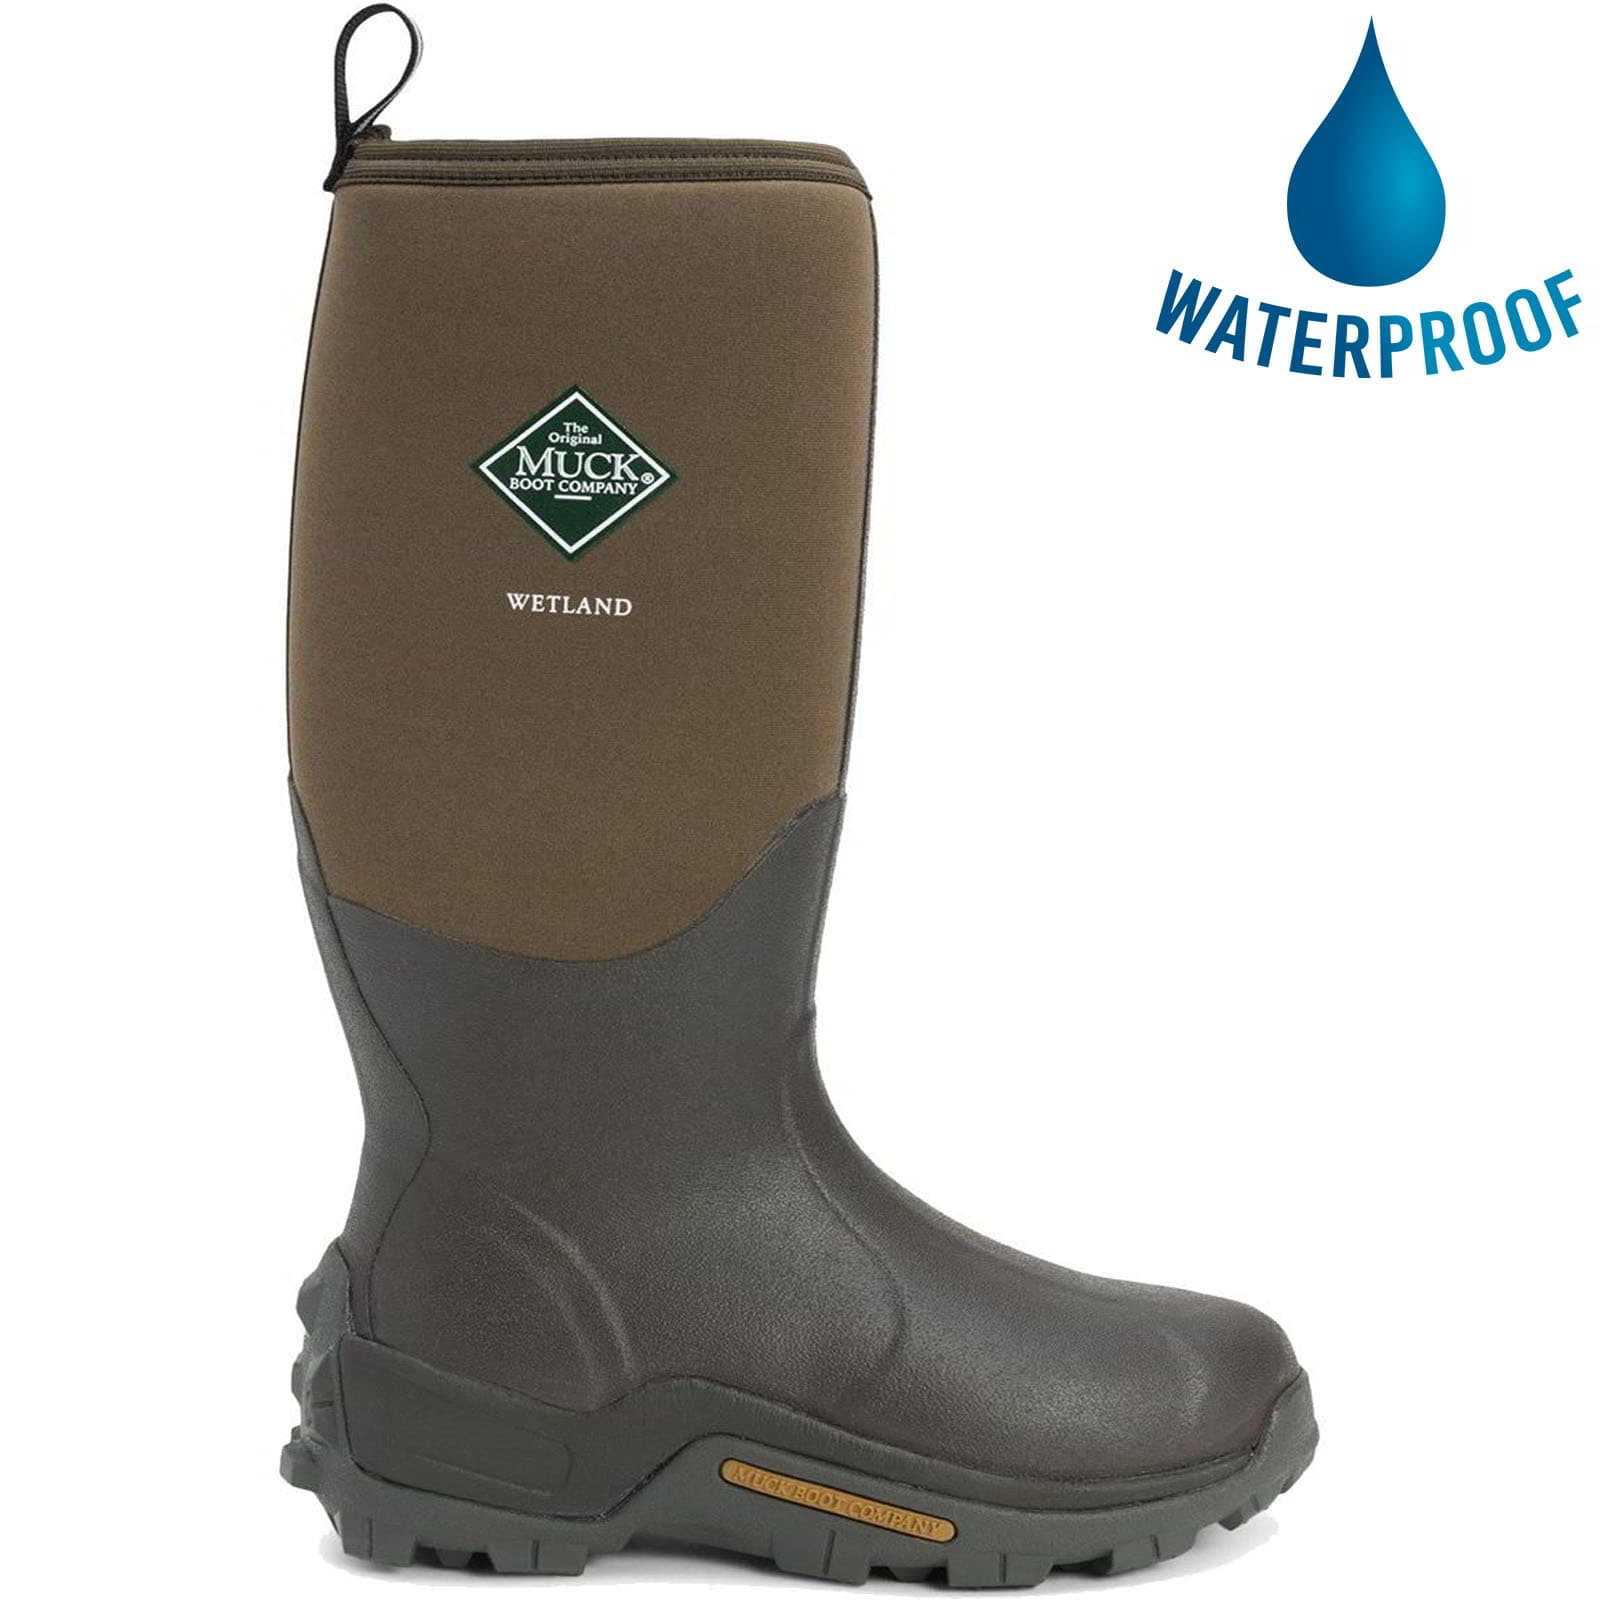 Muck Boots Mens Wellies Wetland Tall Neoprene Wellington - UK 8 Brown 2951